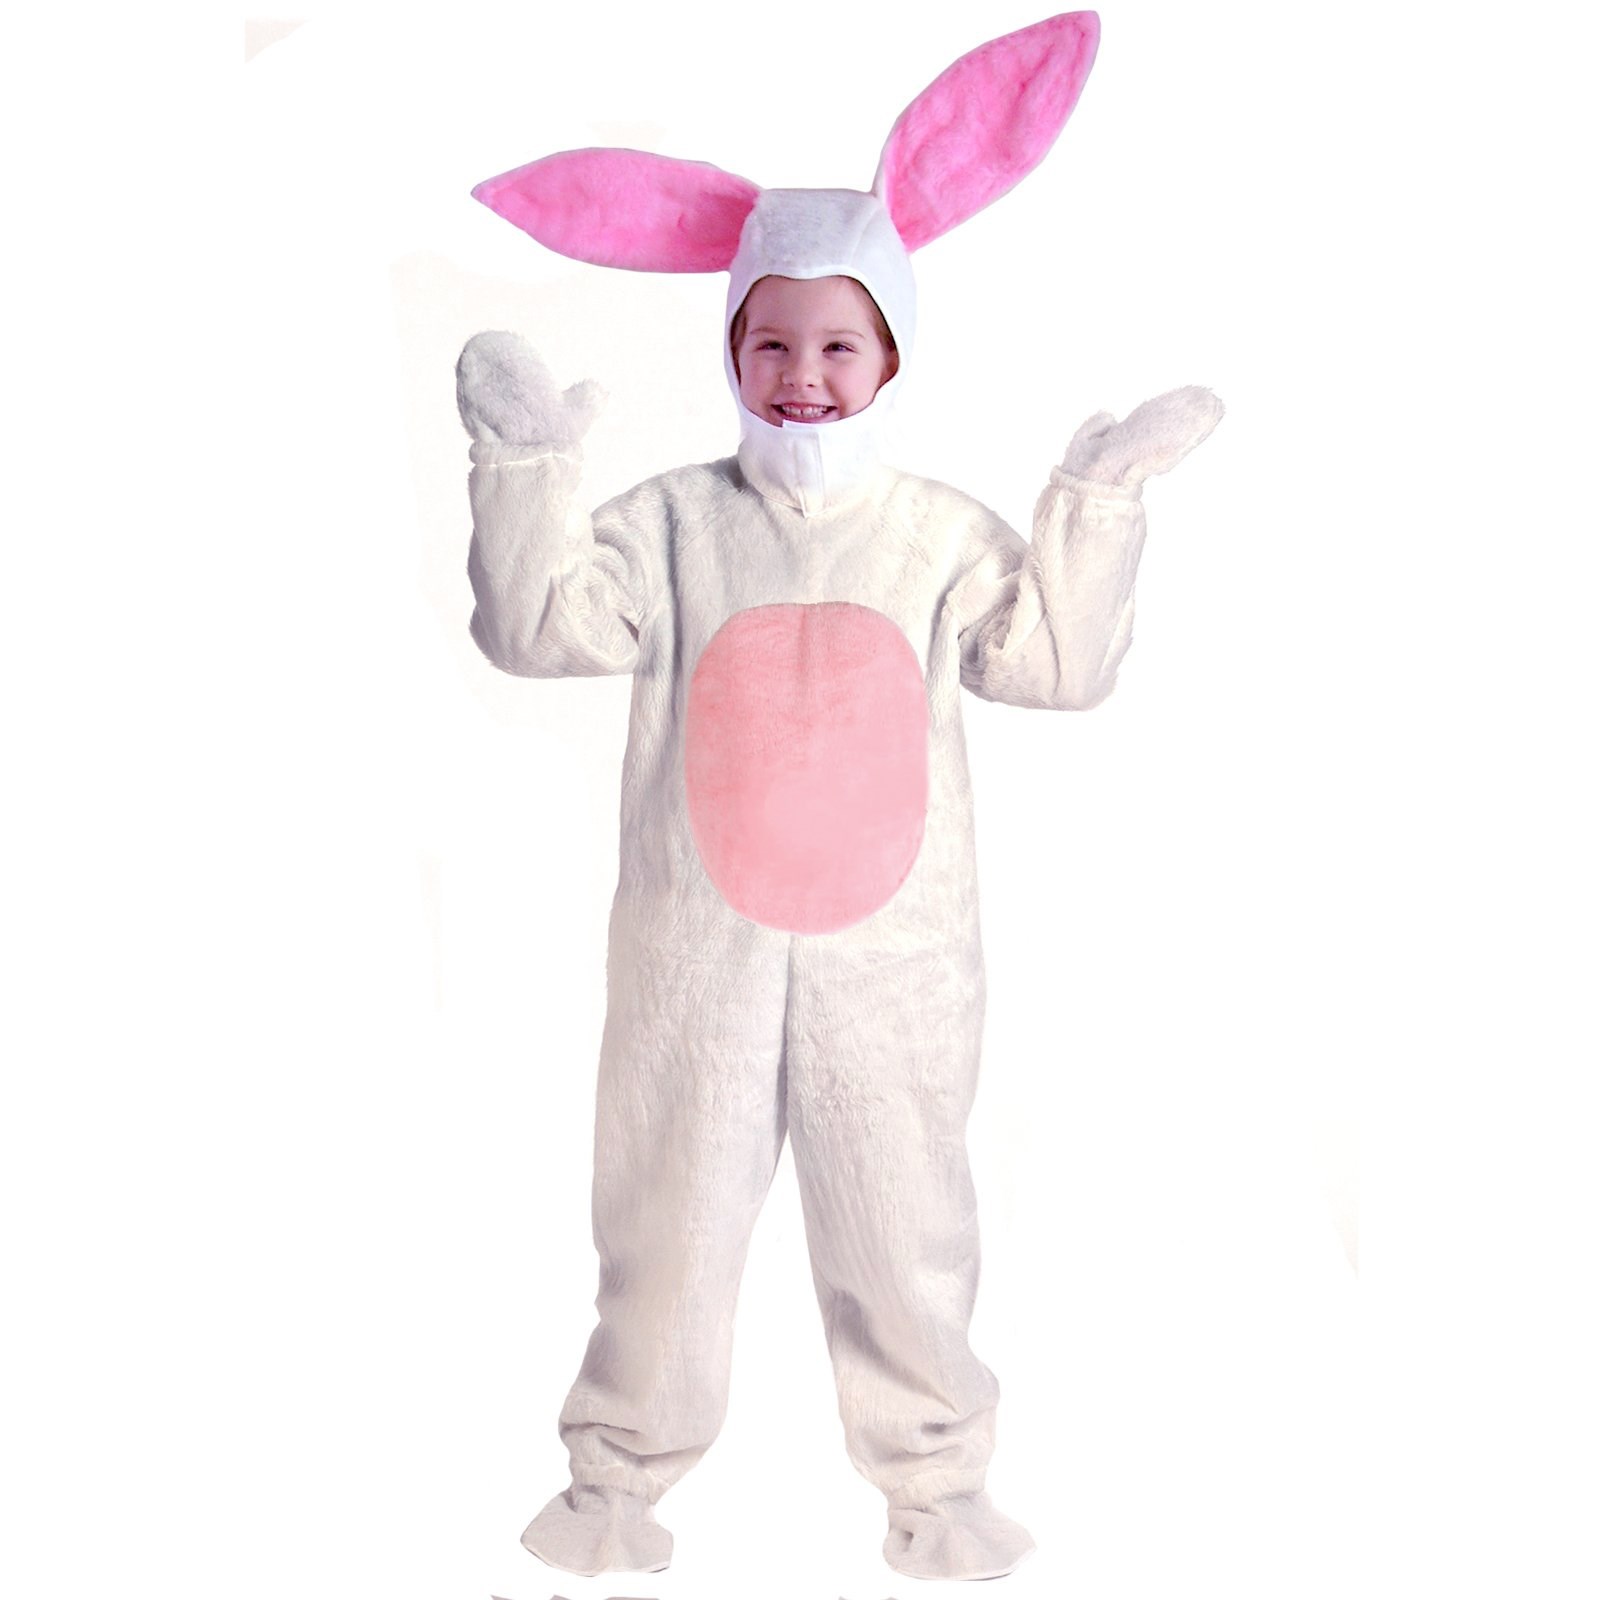 Bunny Suit, Child Costume